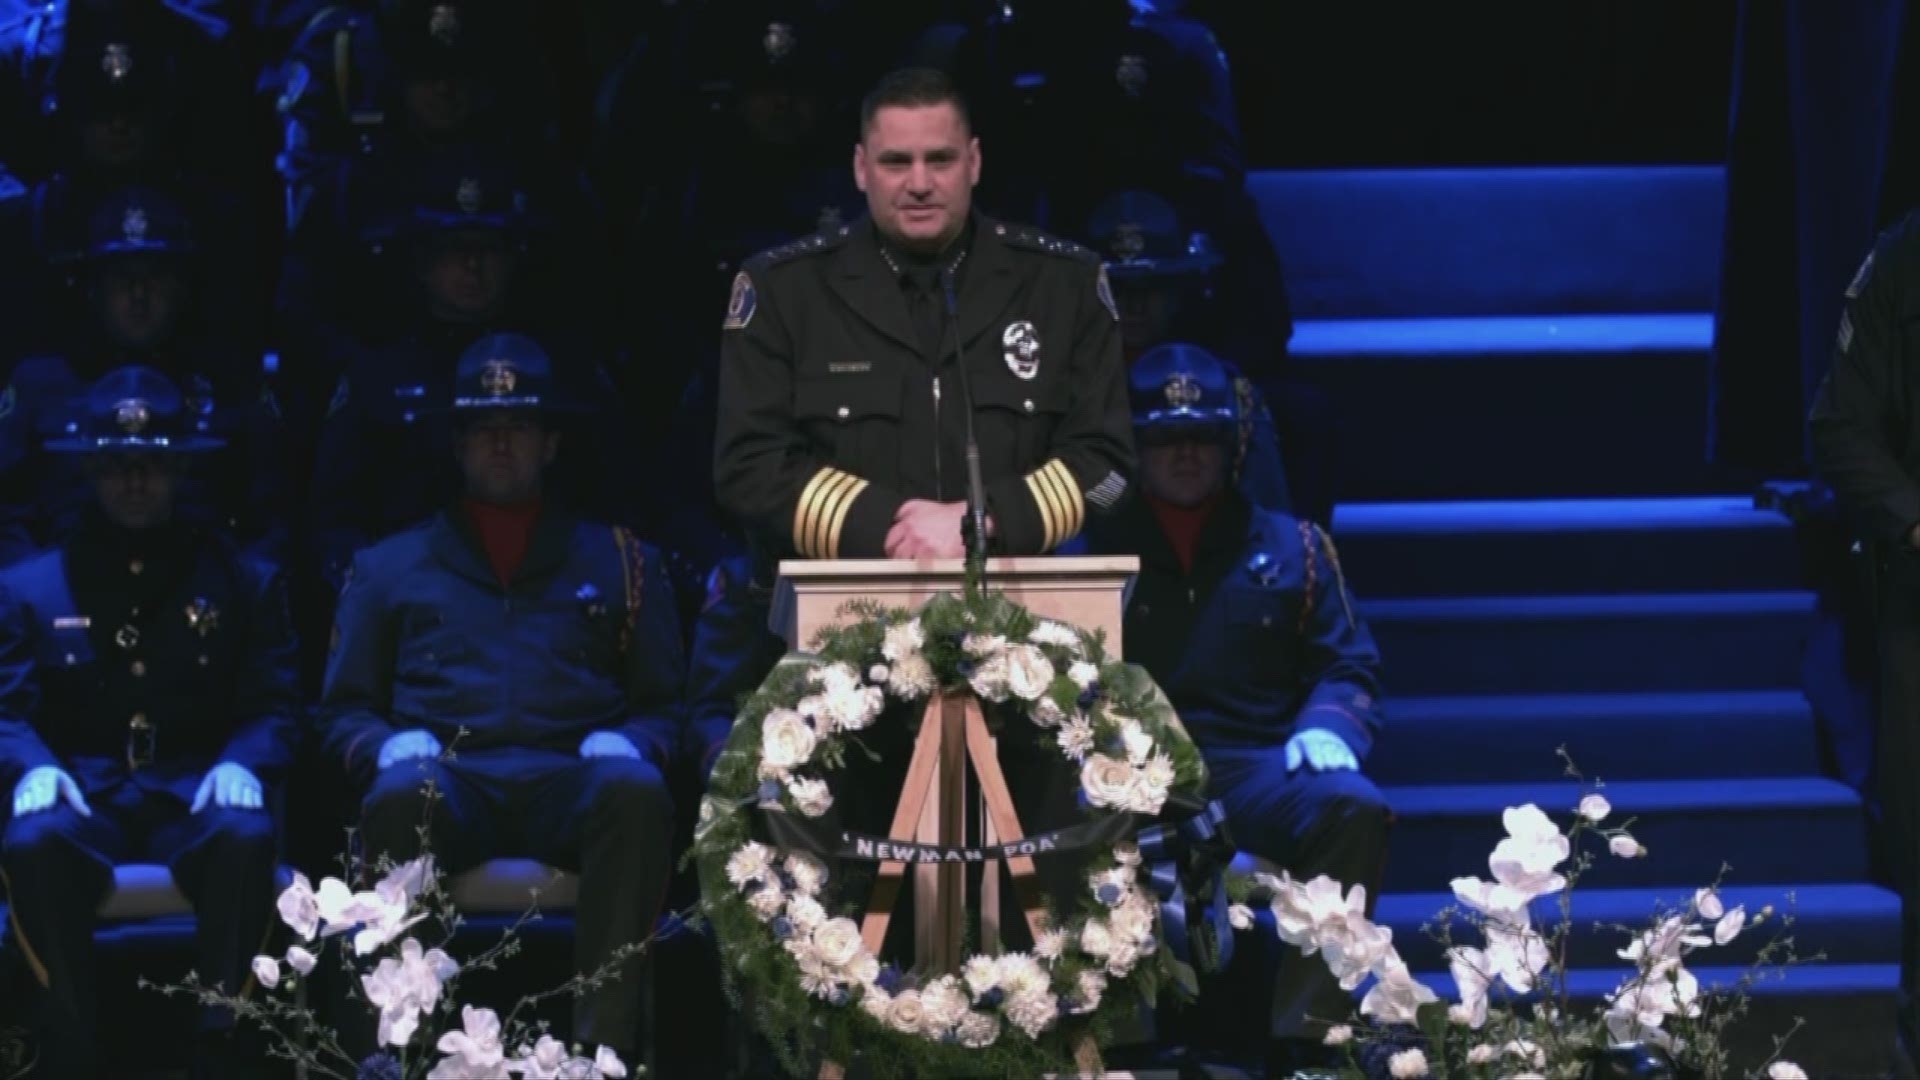 Singh Memorial: Newman Police Chief Randy Richardson | full remarks